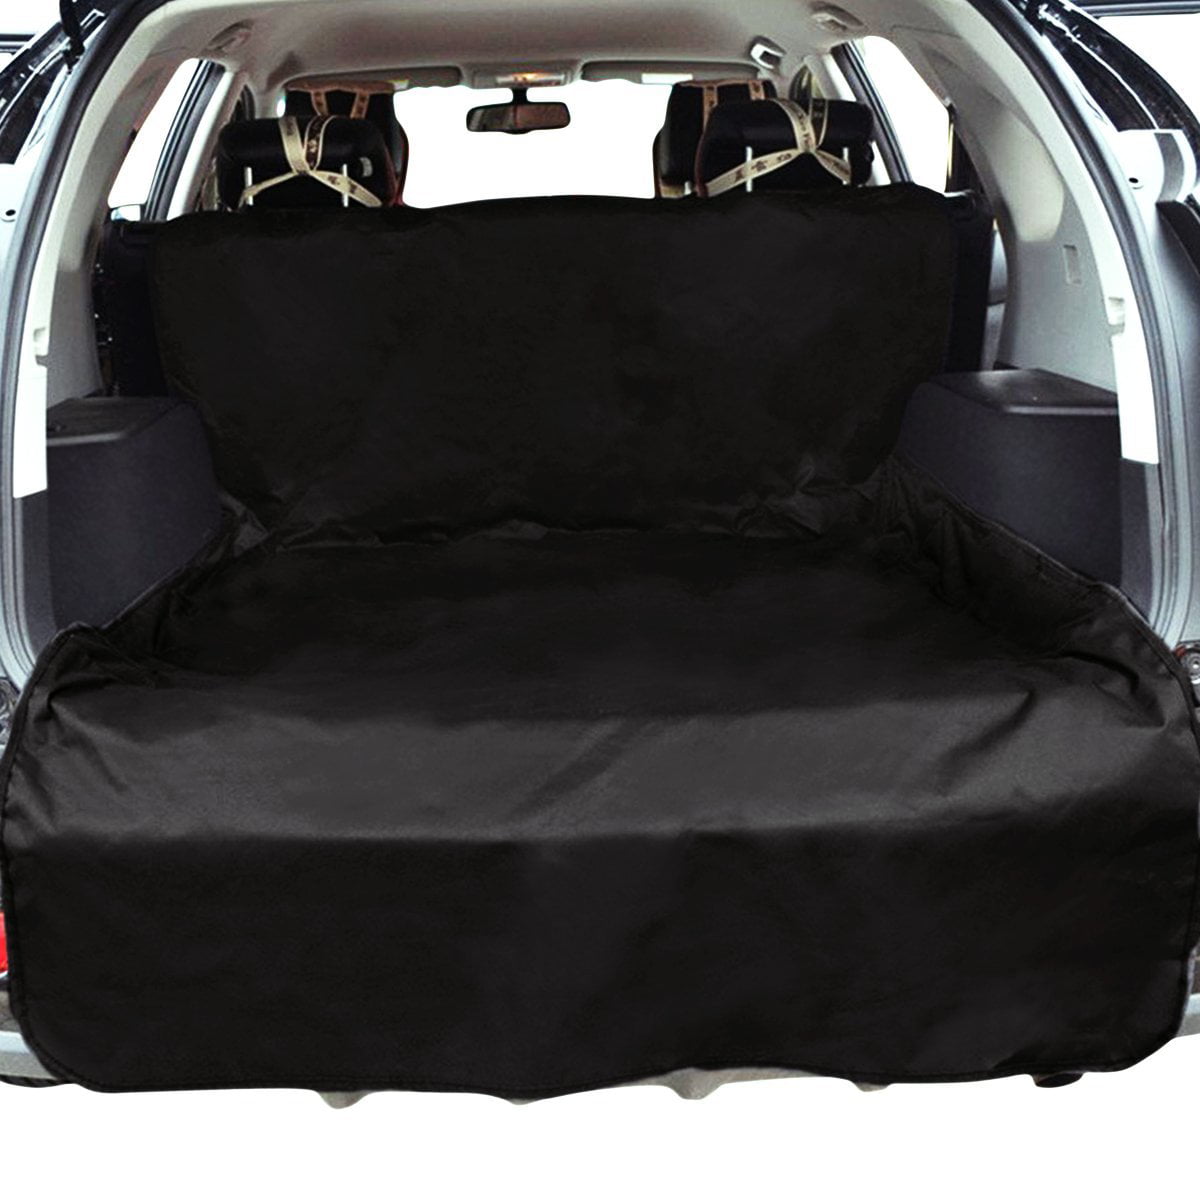 Zone Tech Cargo Cover Bed Floor Mat Classic Black Heavy Duty Waterproof Dog Pet Vehicle Seat